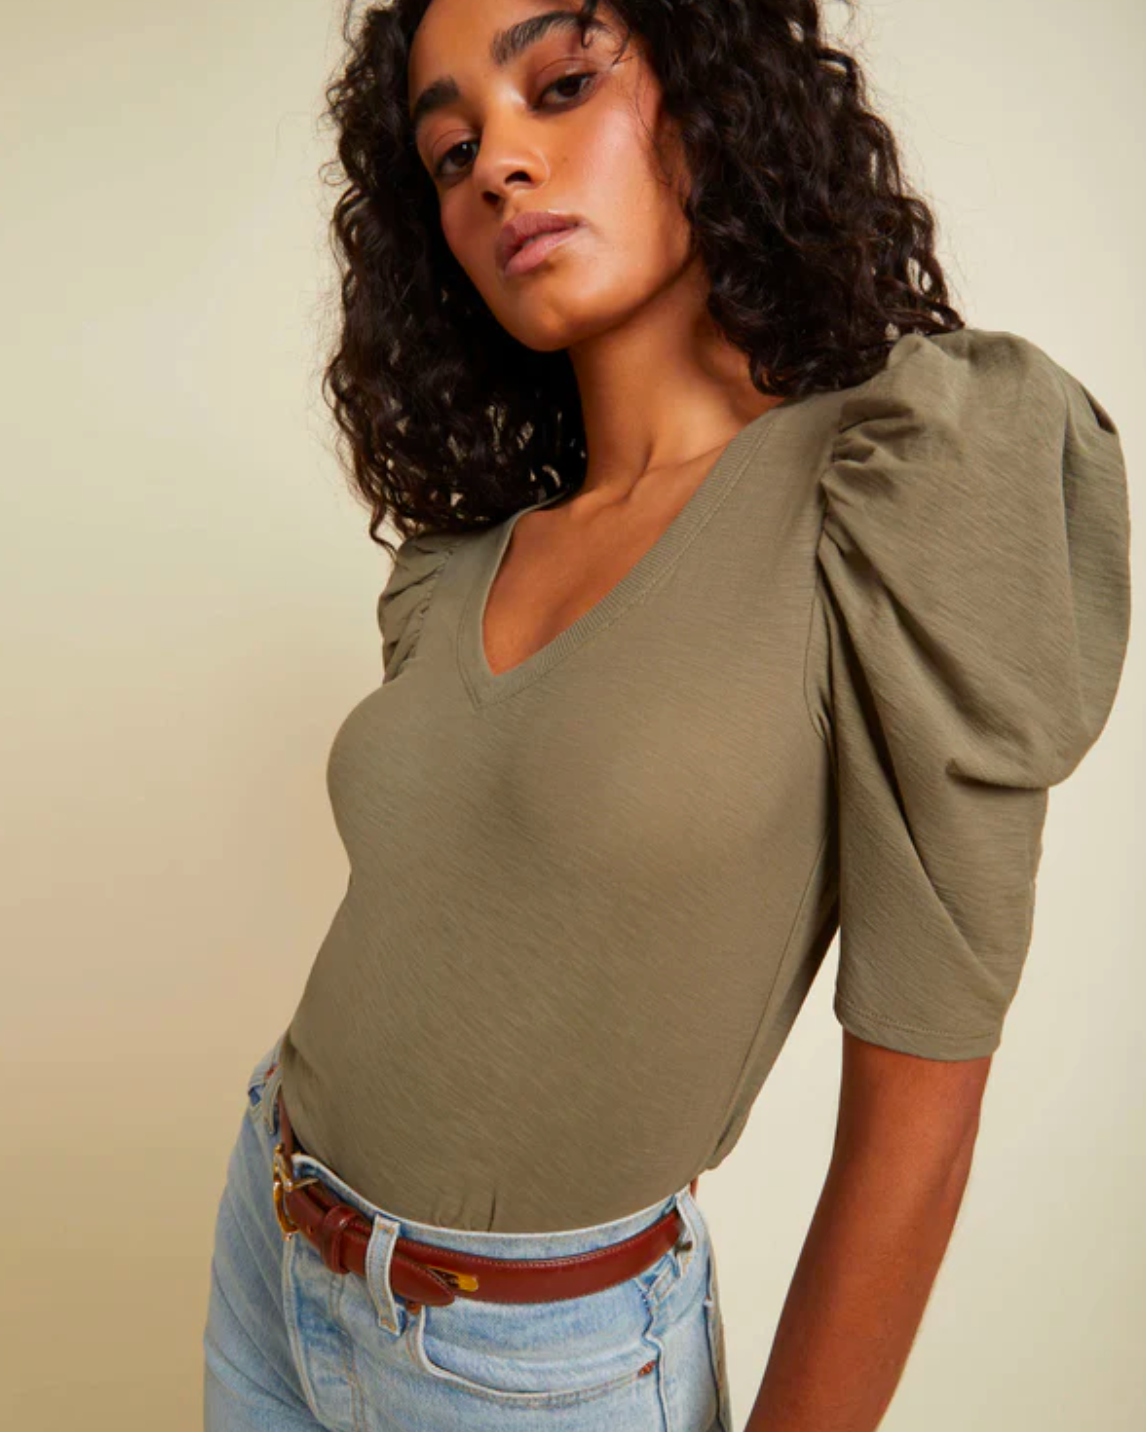 Model wearing Nation LTD Jillian Bold Shoulder V Neck in Ivy color wearing light jeans and a brown belt on a yellow background